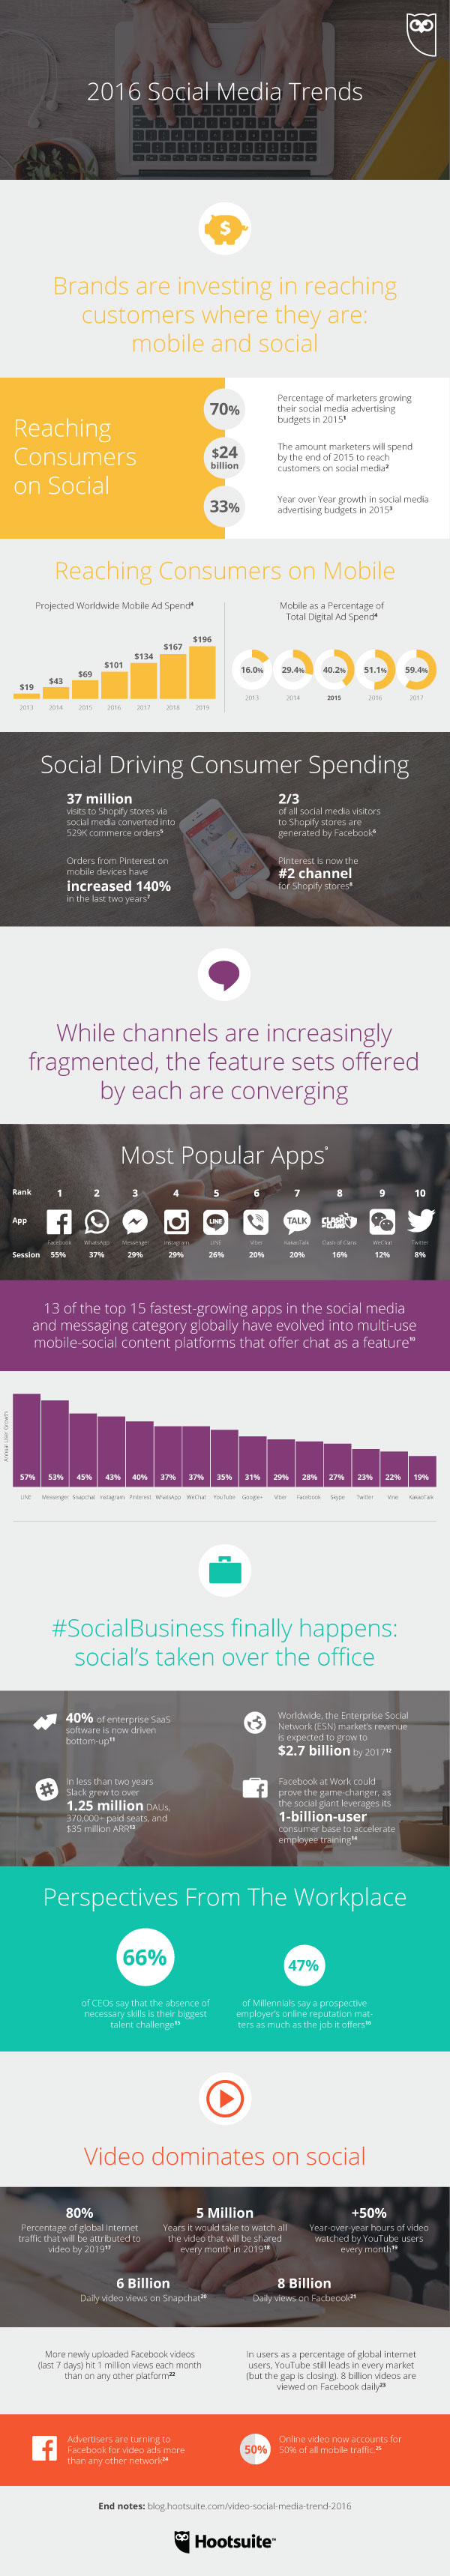 social media trends infographic